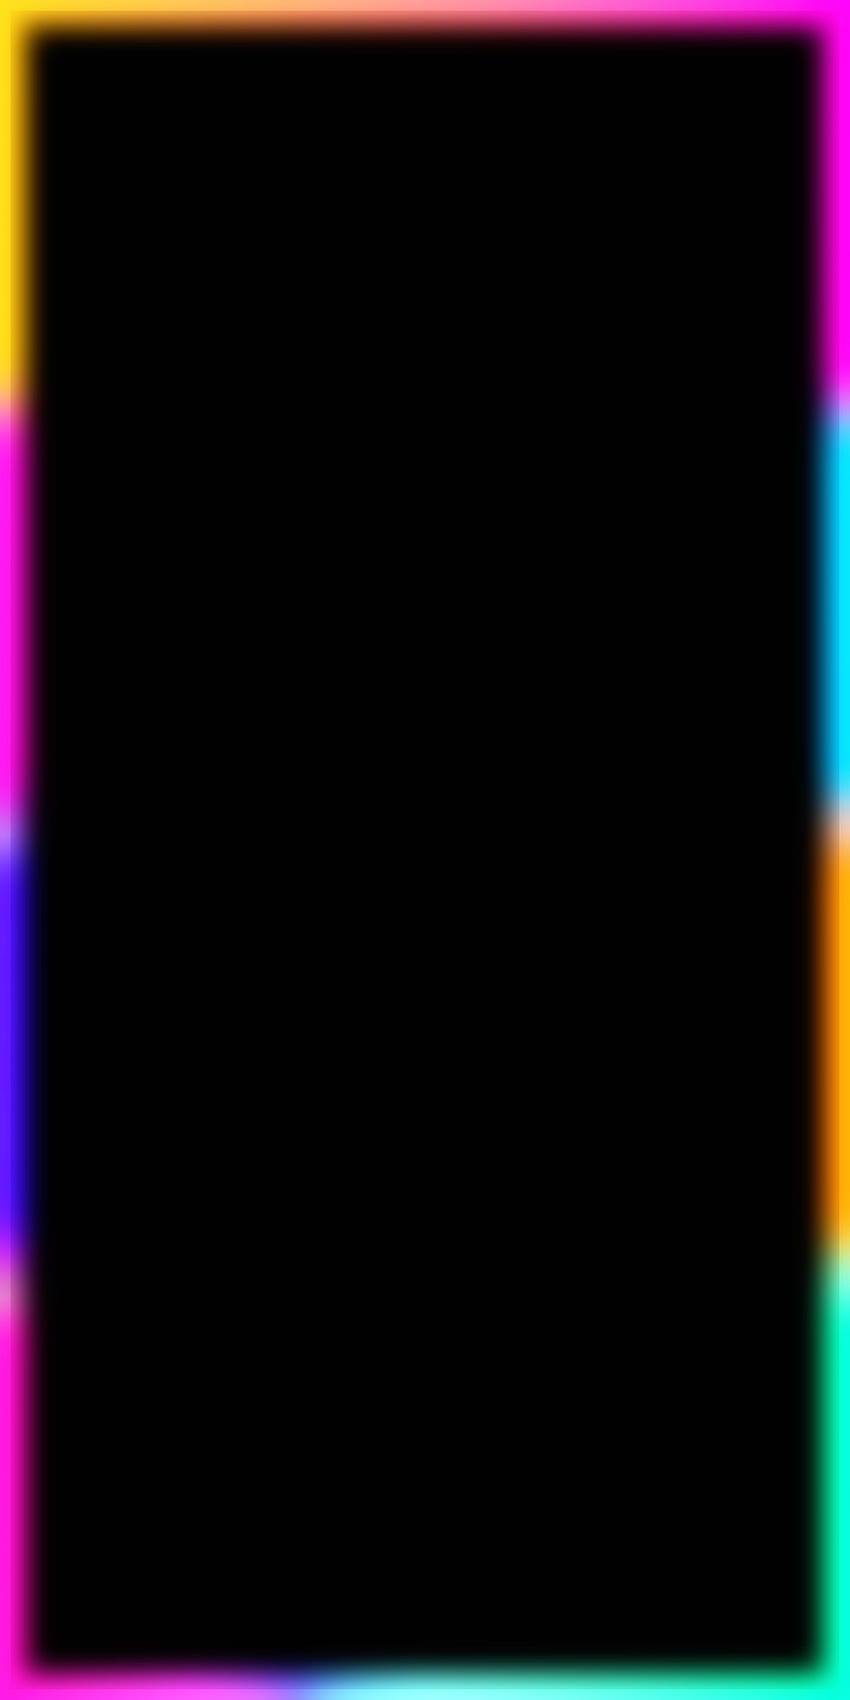 Tepi Neon, Merah Muda, Biru, Kuning, Gelap, Amoled, Penuh Warna, Oranye, Hijau wallpaper ponsel HD